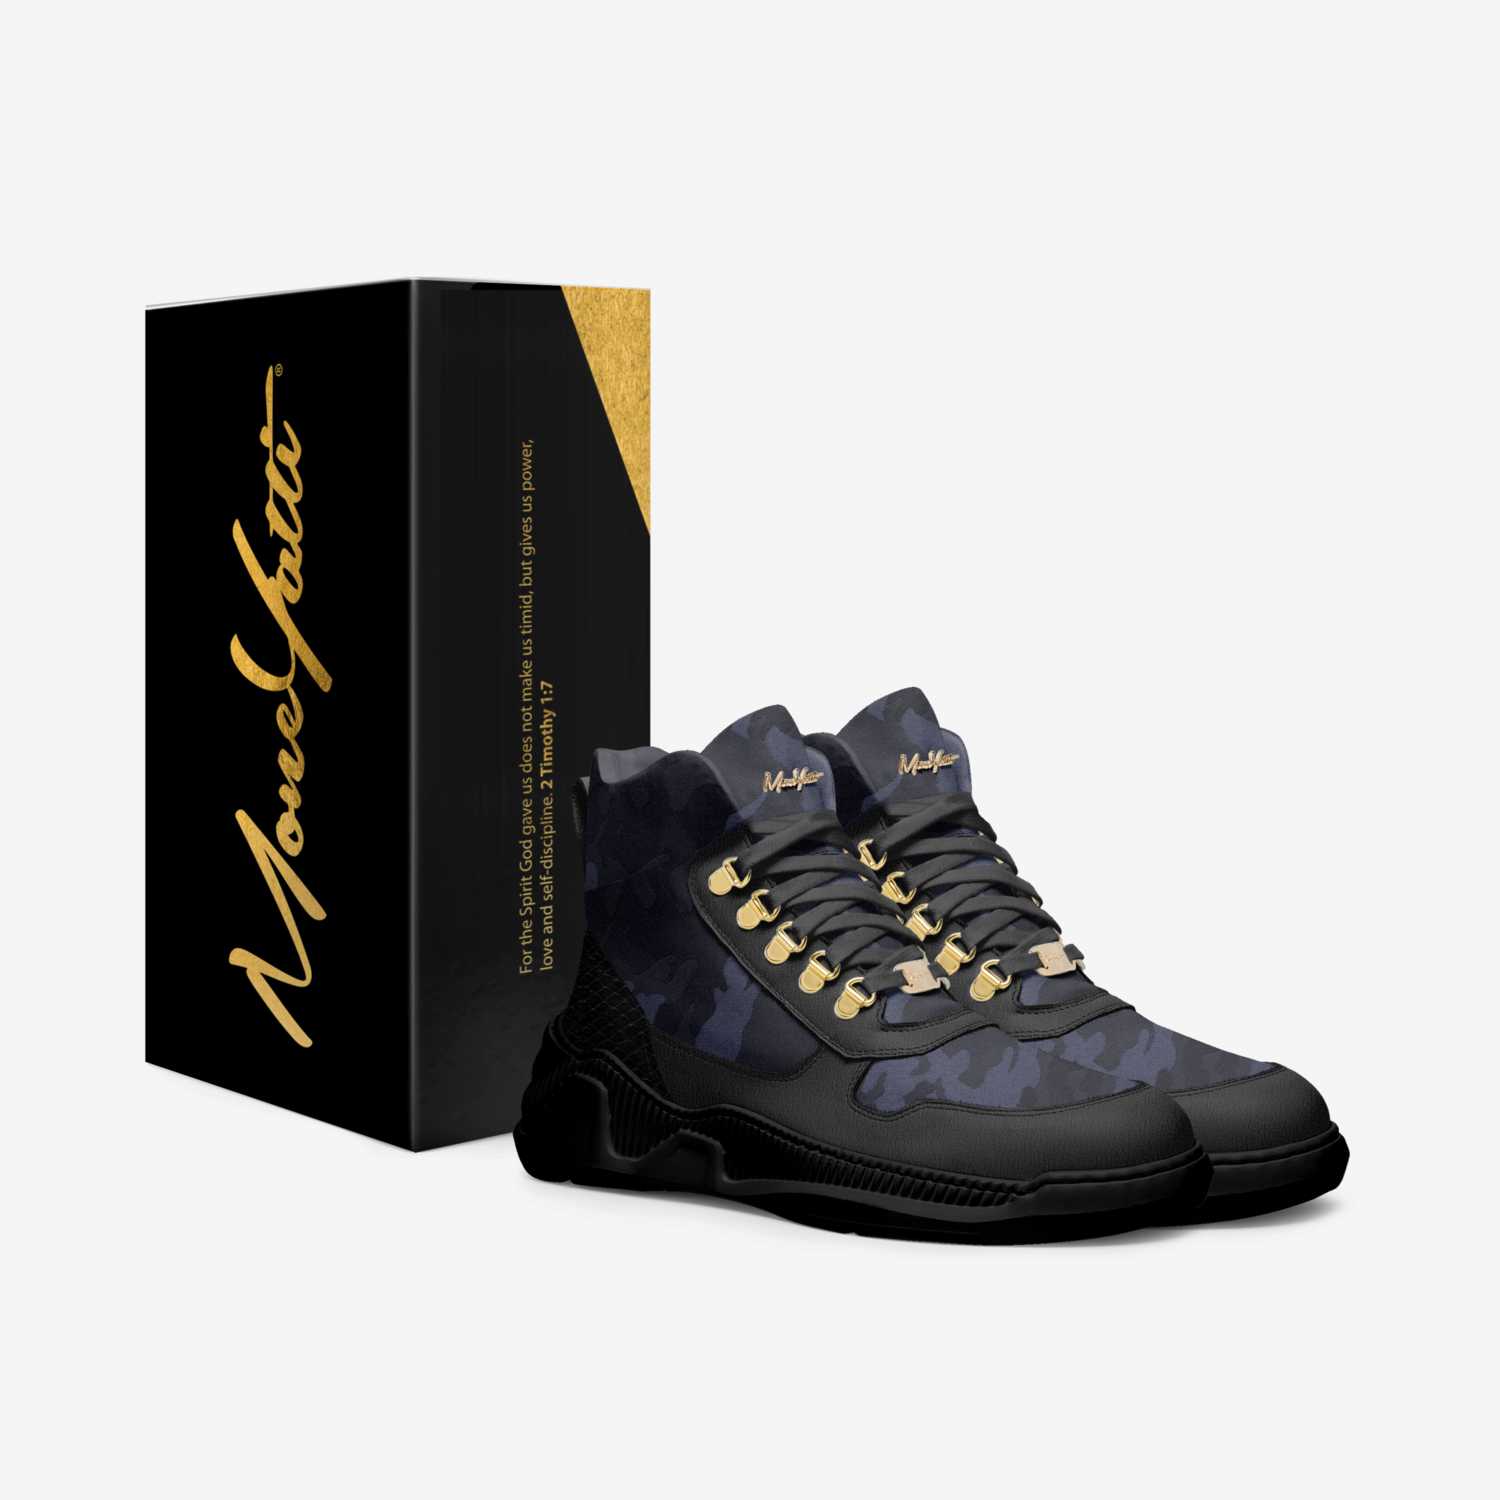 Moneyatti TrapII08 custom made in Italy shoes by Moneyatti Brand | Box view